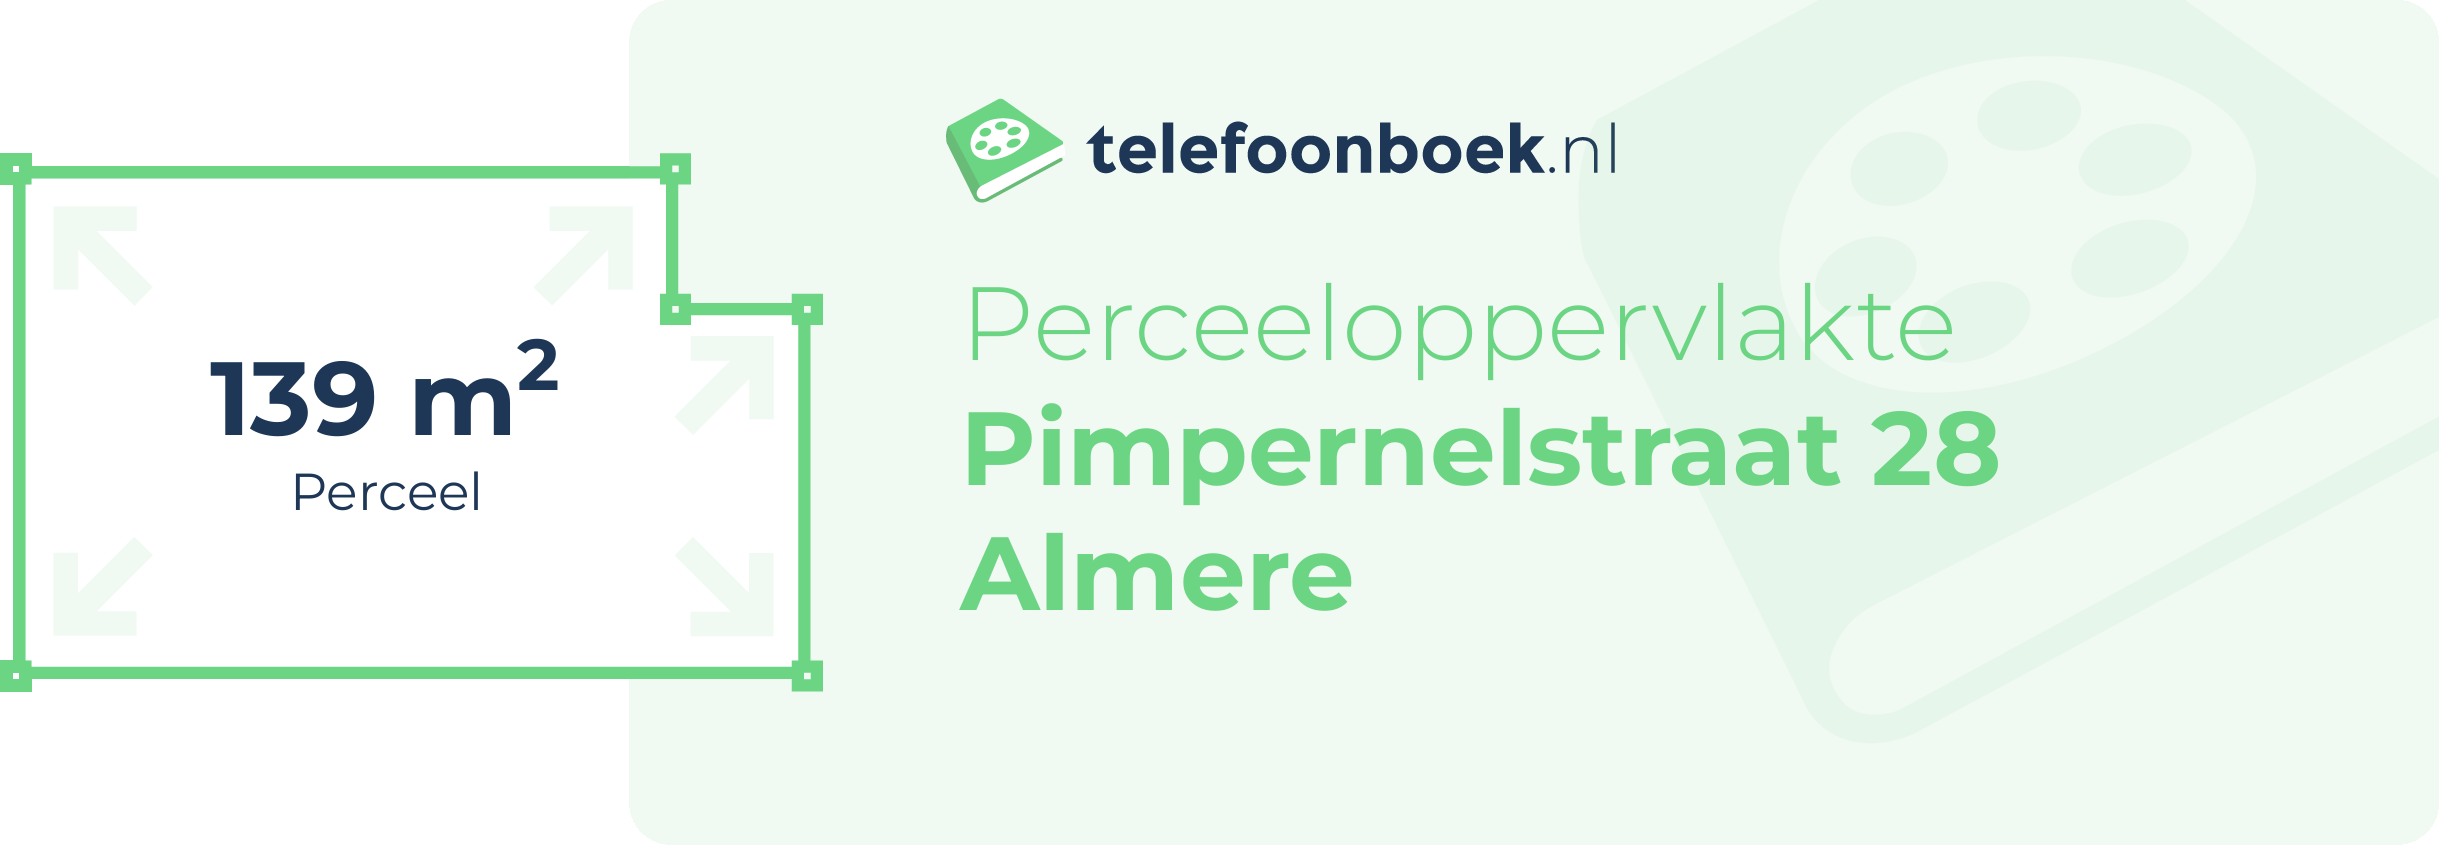 Perceeloppervlakte Pimpernelstraat 28 Almere